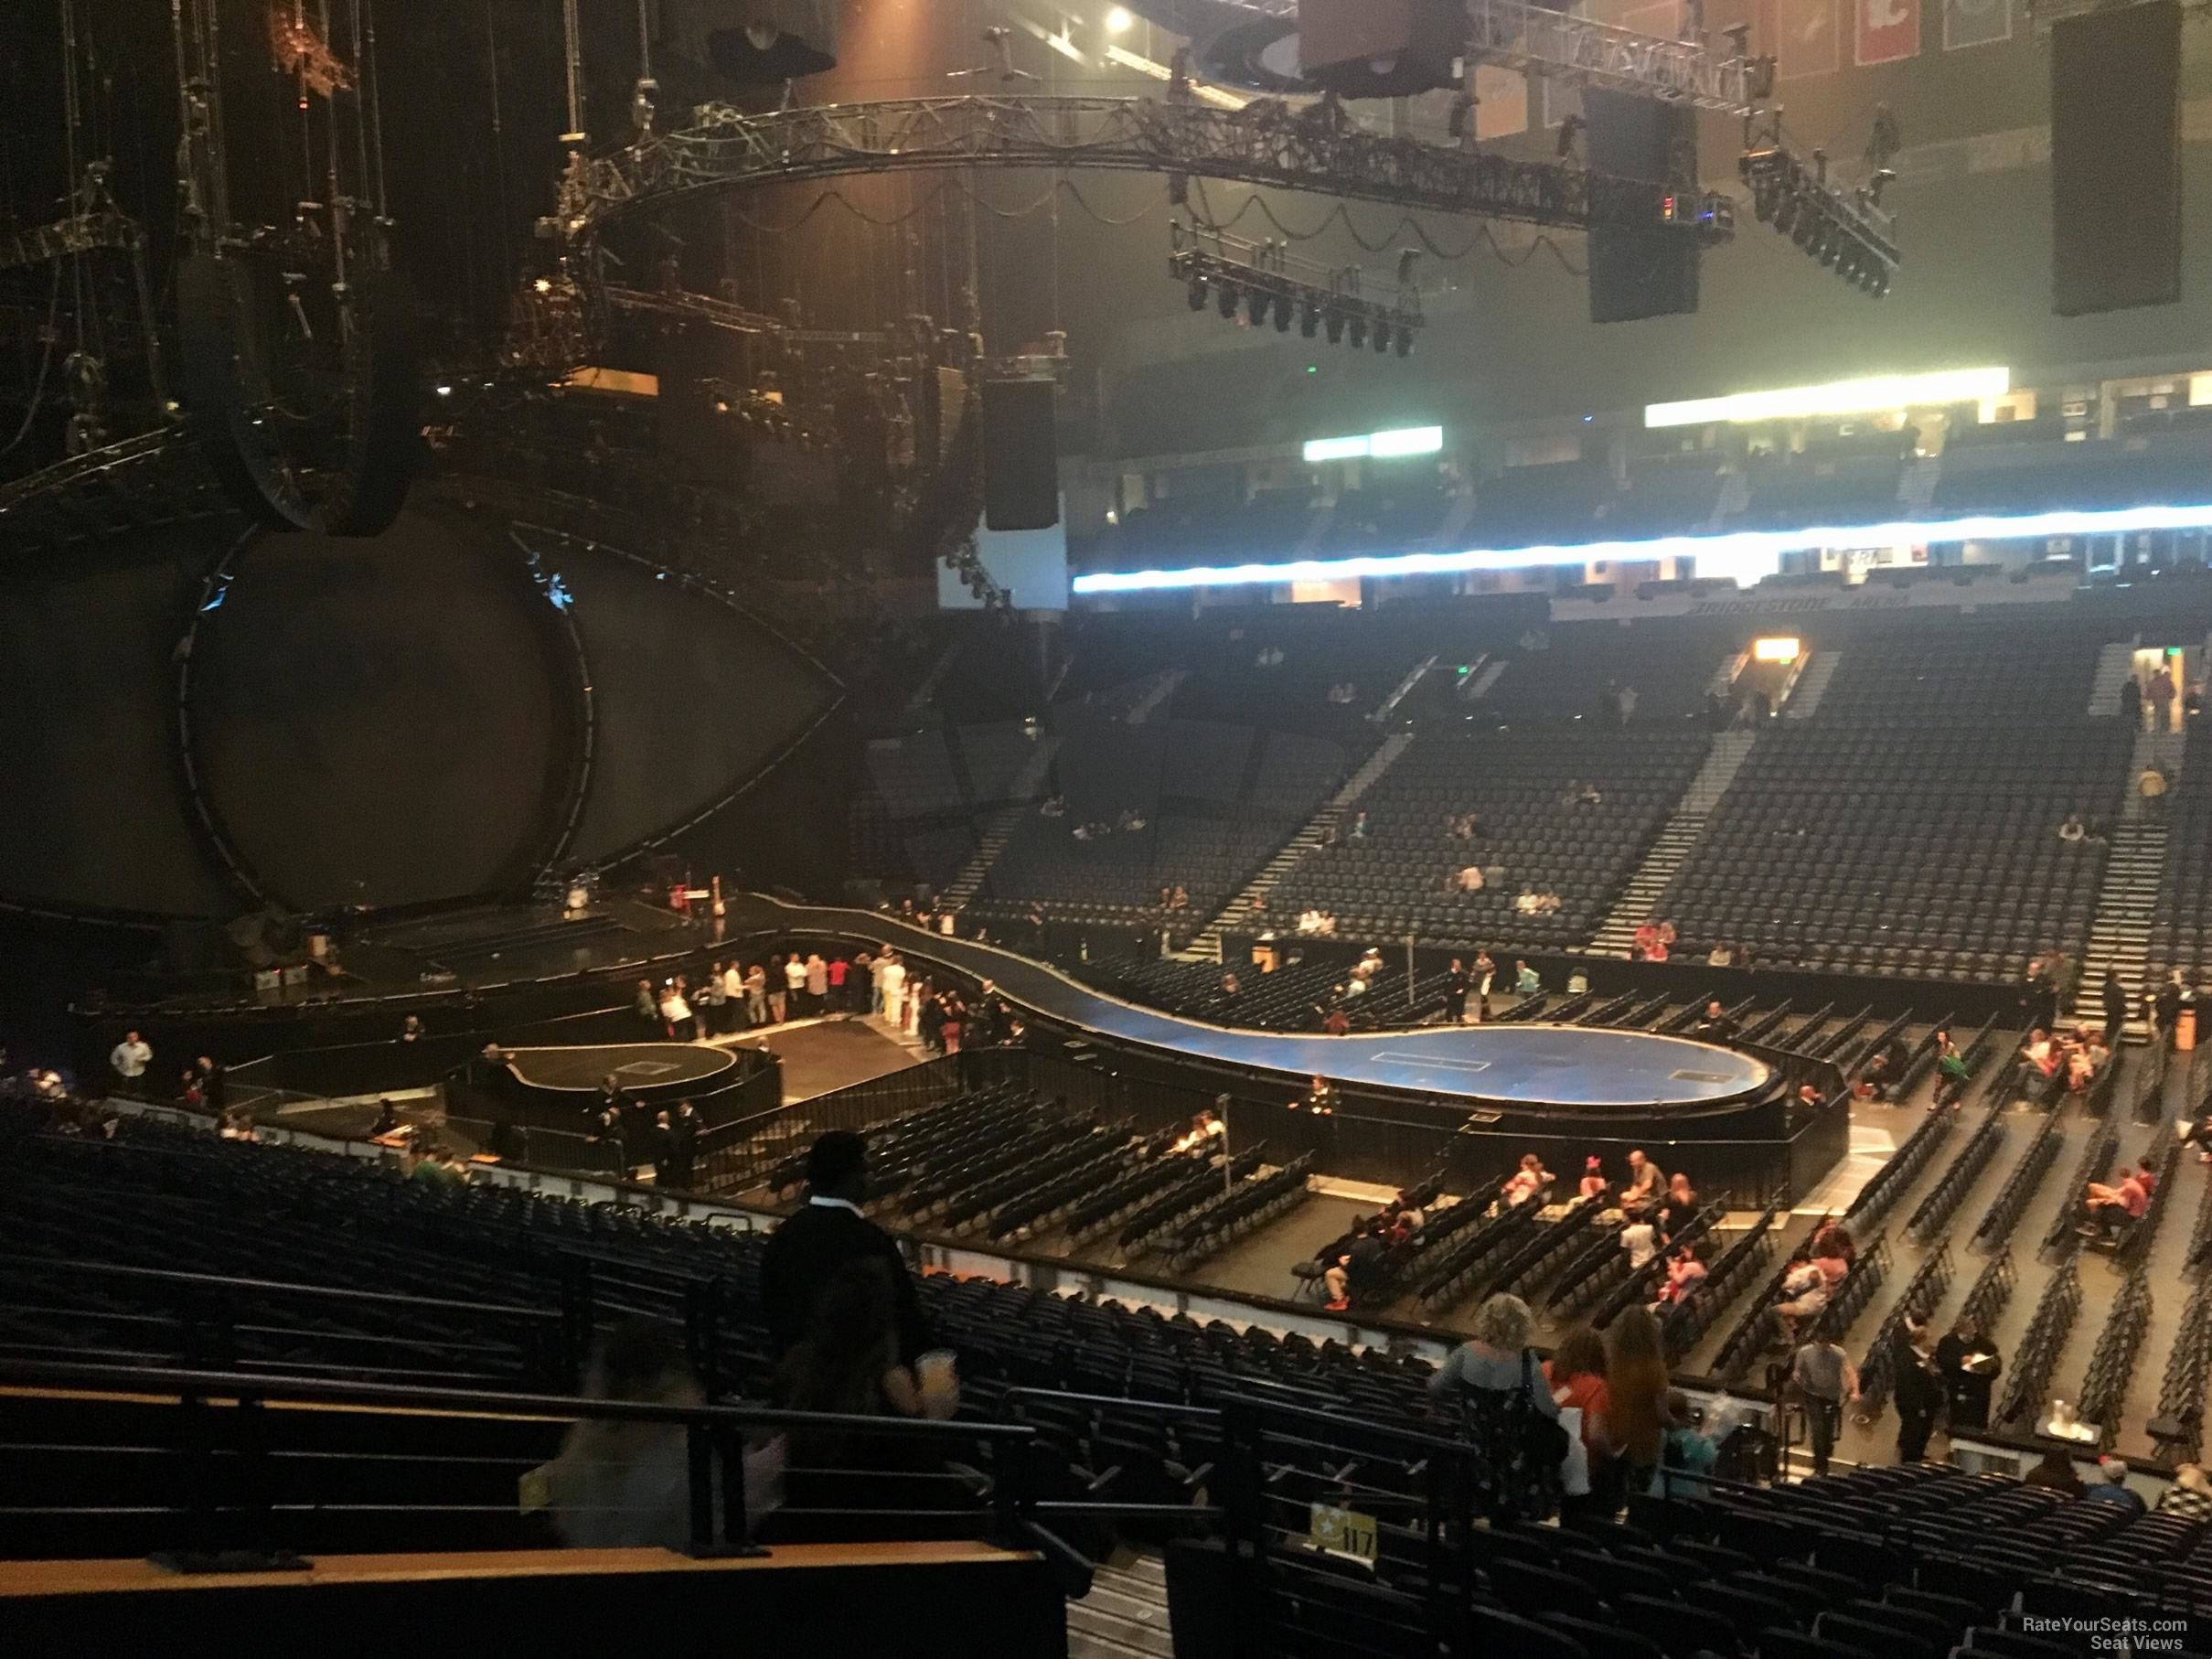 Bridgestone Arena Section 117 Concert Seating - RateYourSeats.com2419 x 1814